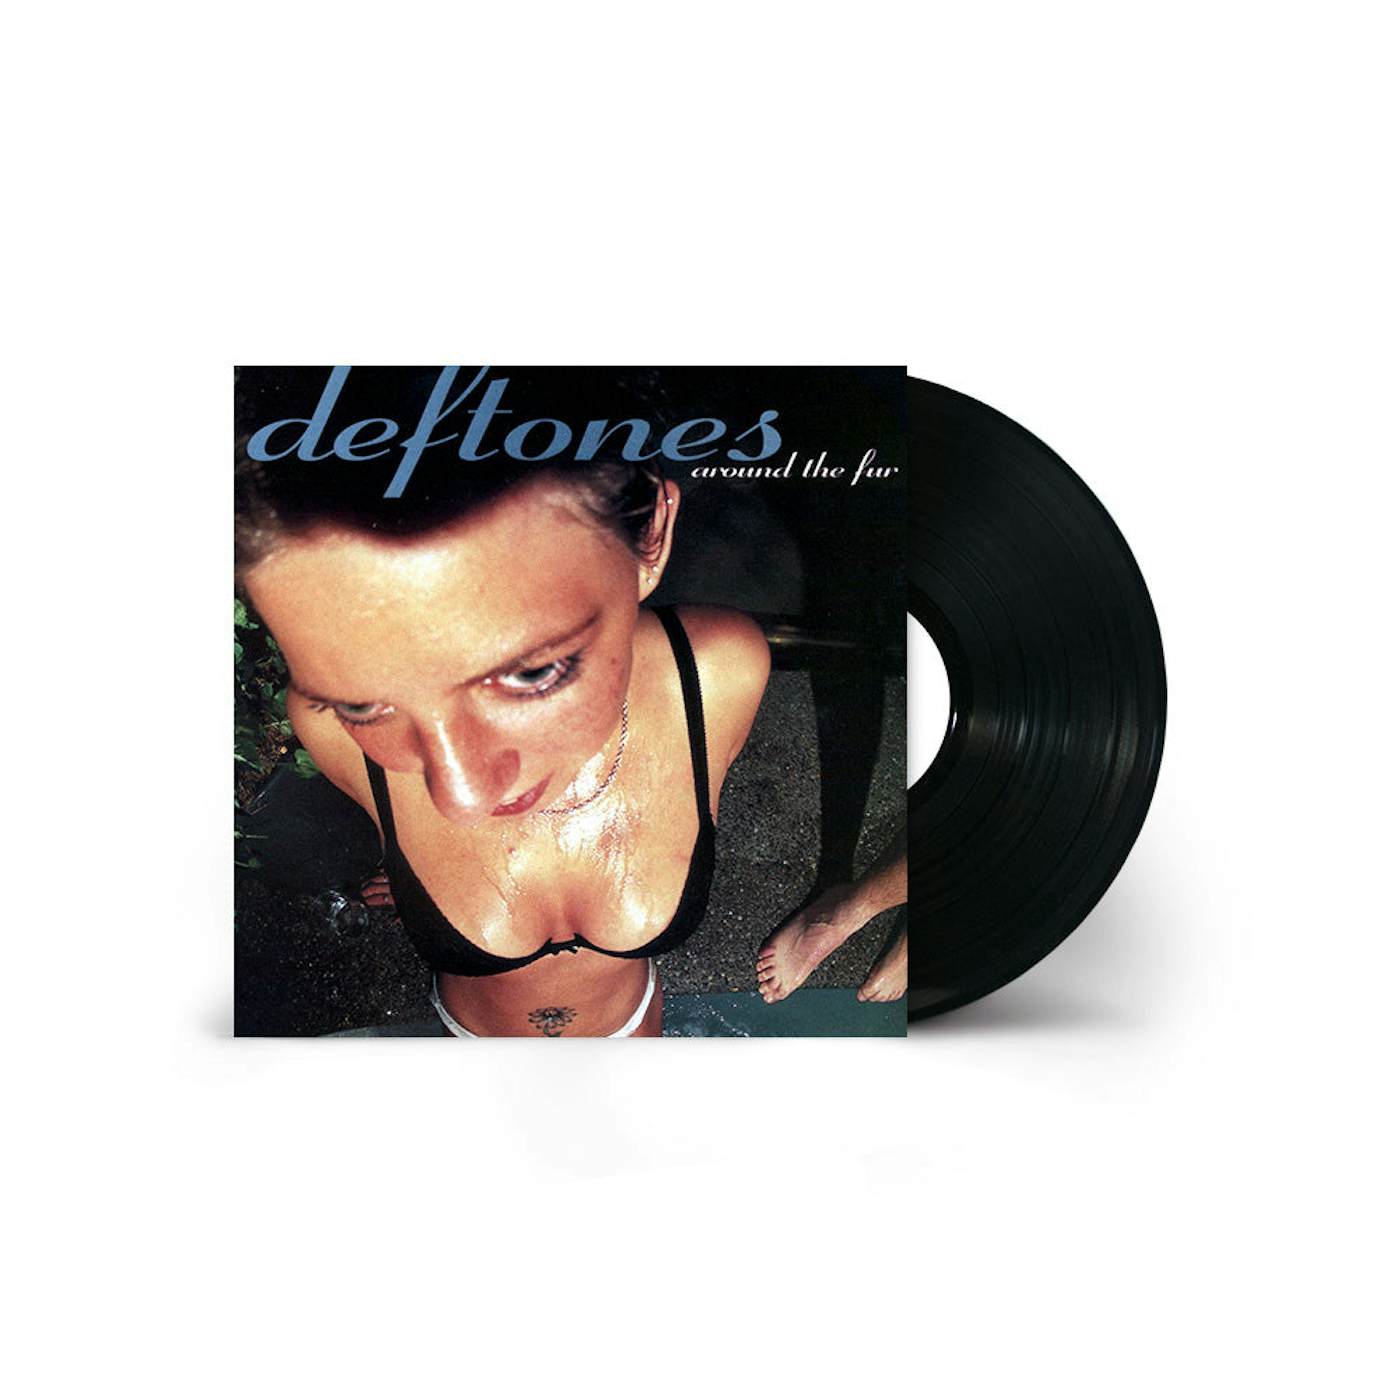 DEFTONES self-titled 12 LP Vinyl Album Cover Gallery & Information  #vinylrecords